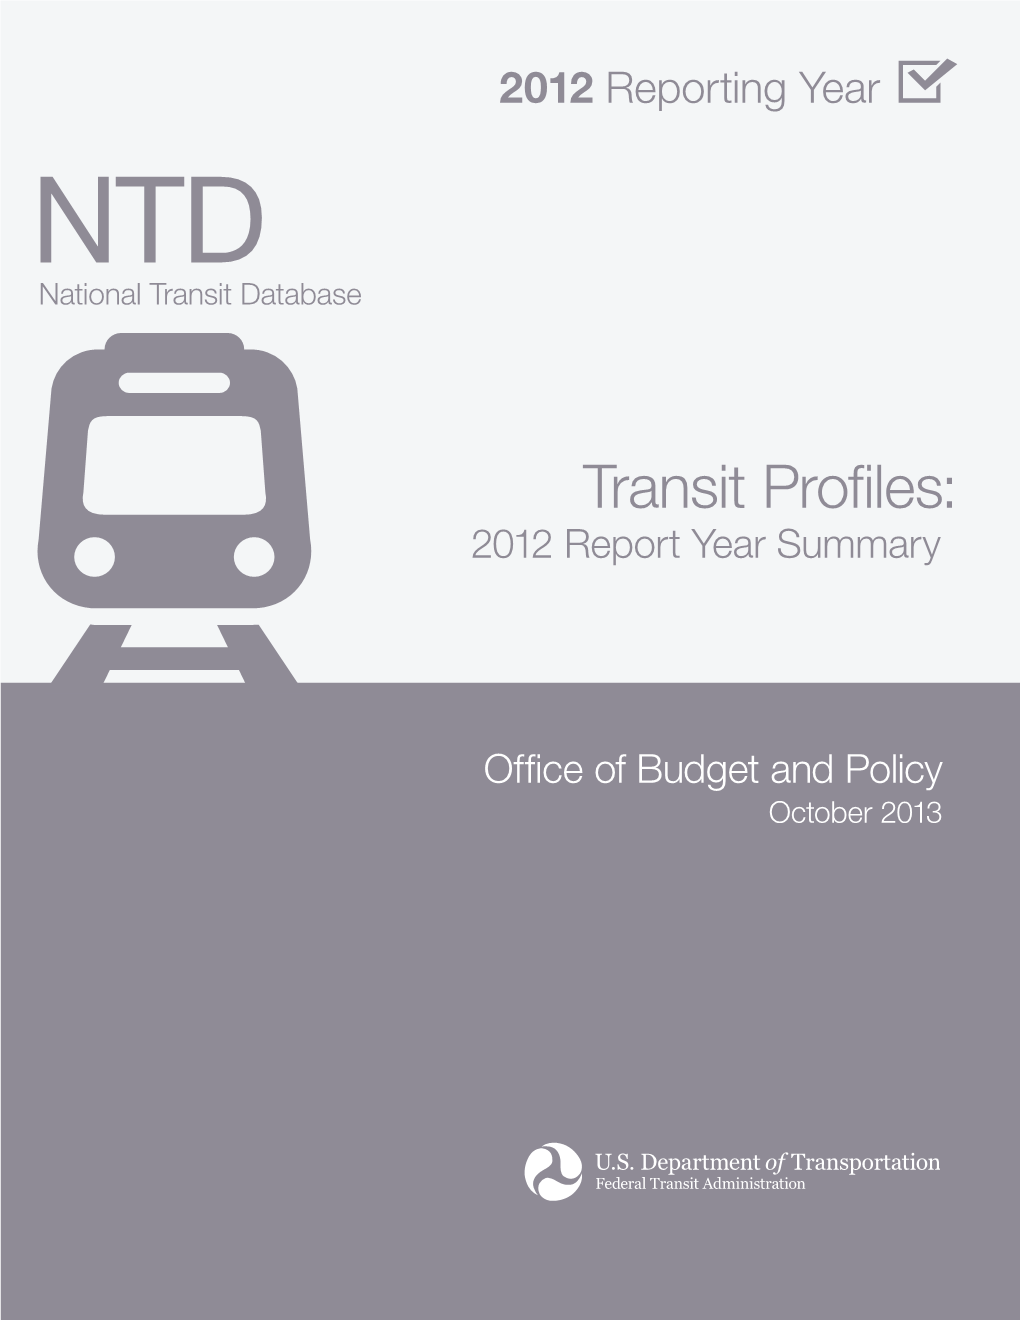 Transit Profiles: All Reporting Agencies